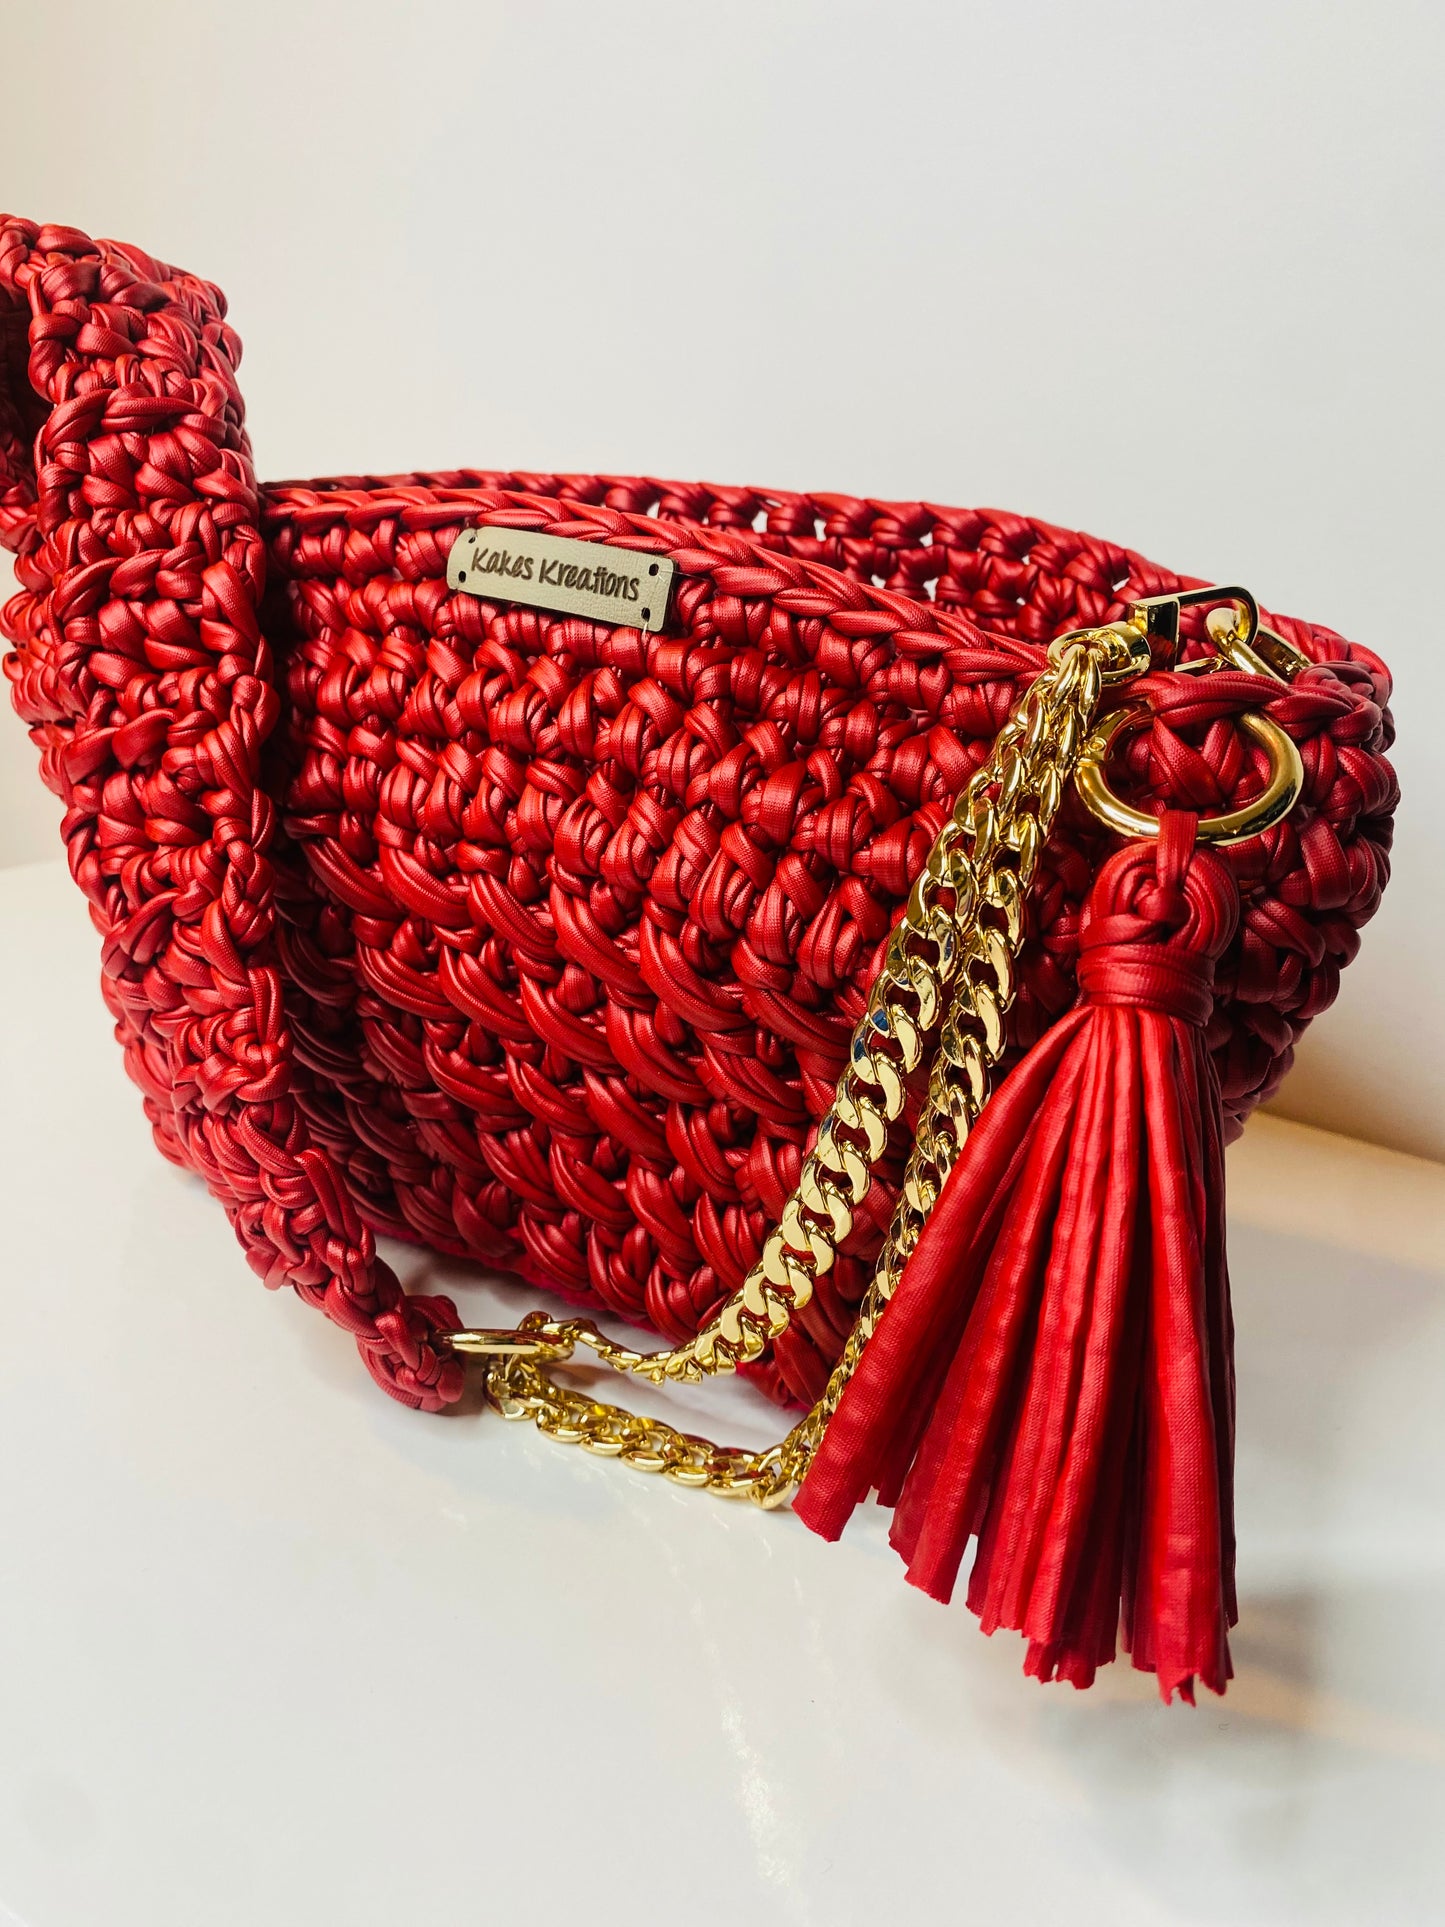 Smooth as leather, Vegan leather crochet bag, Kreations by V Luxury Crochet Handbag